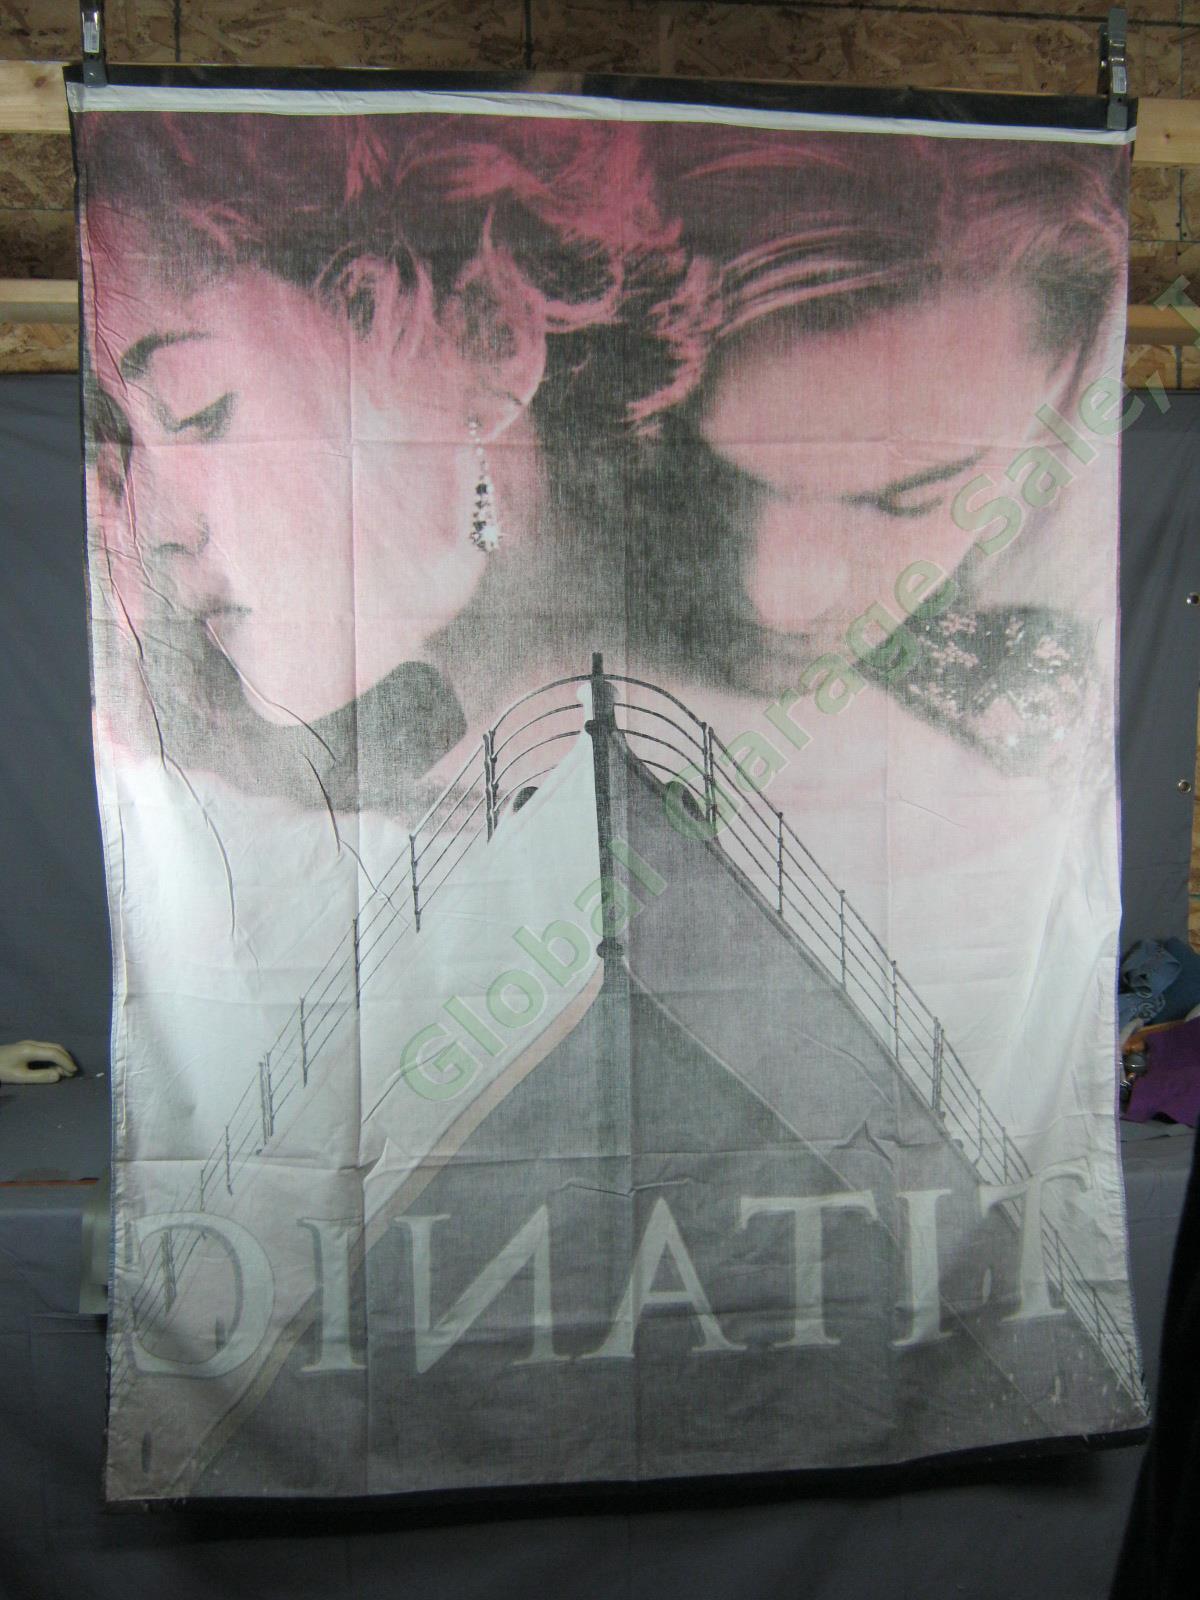 1997 Titanic Movie Theatre Fabric Banner Leonardo DiCaprio Kate Winslet Poster 3